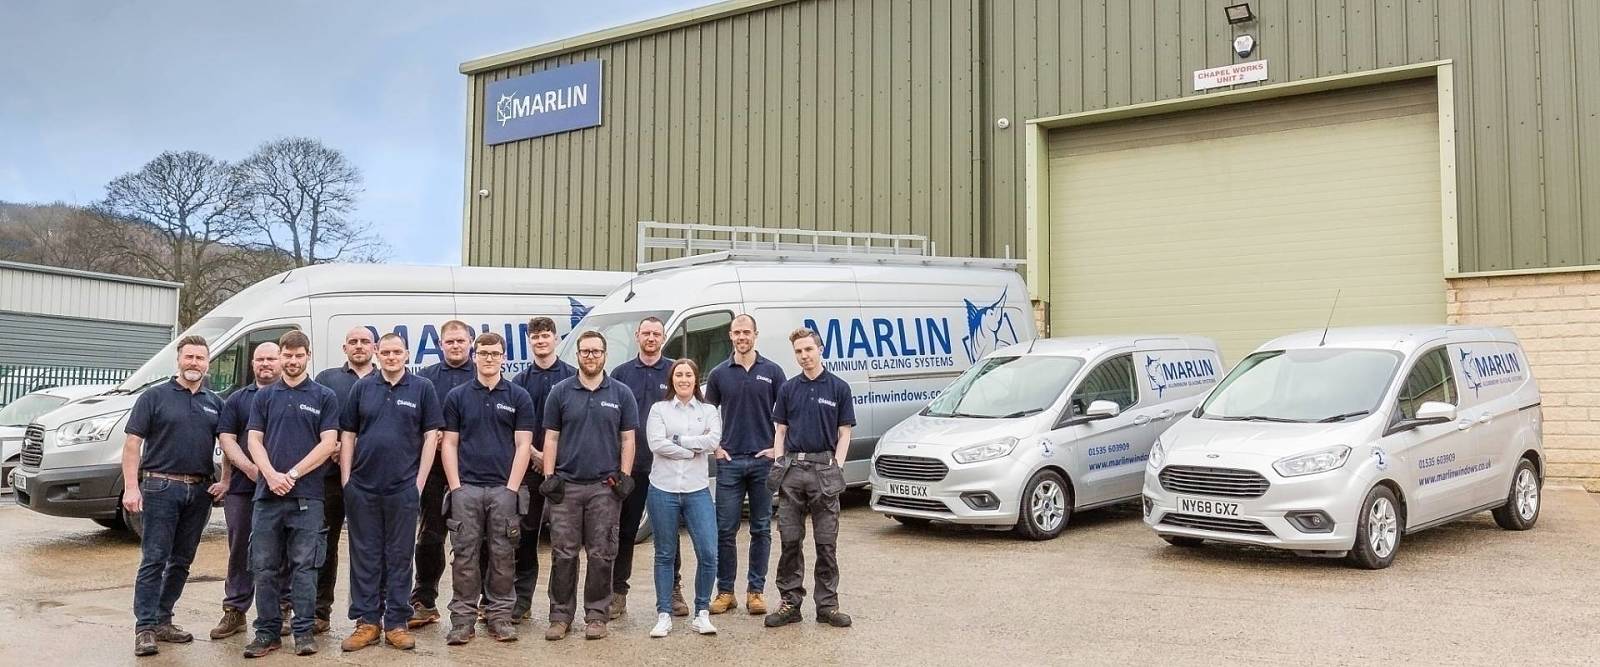 The Marlin Windows Company Team.